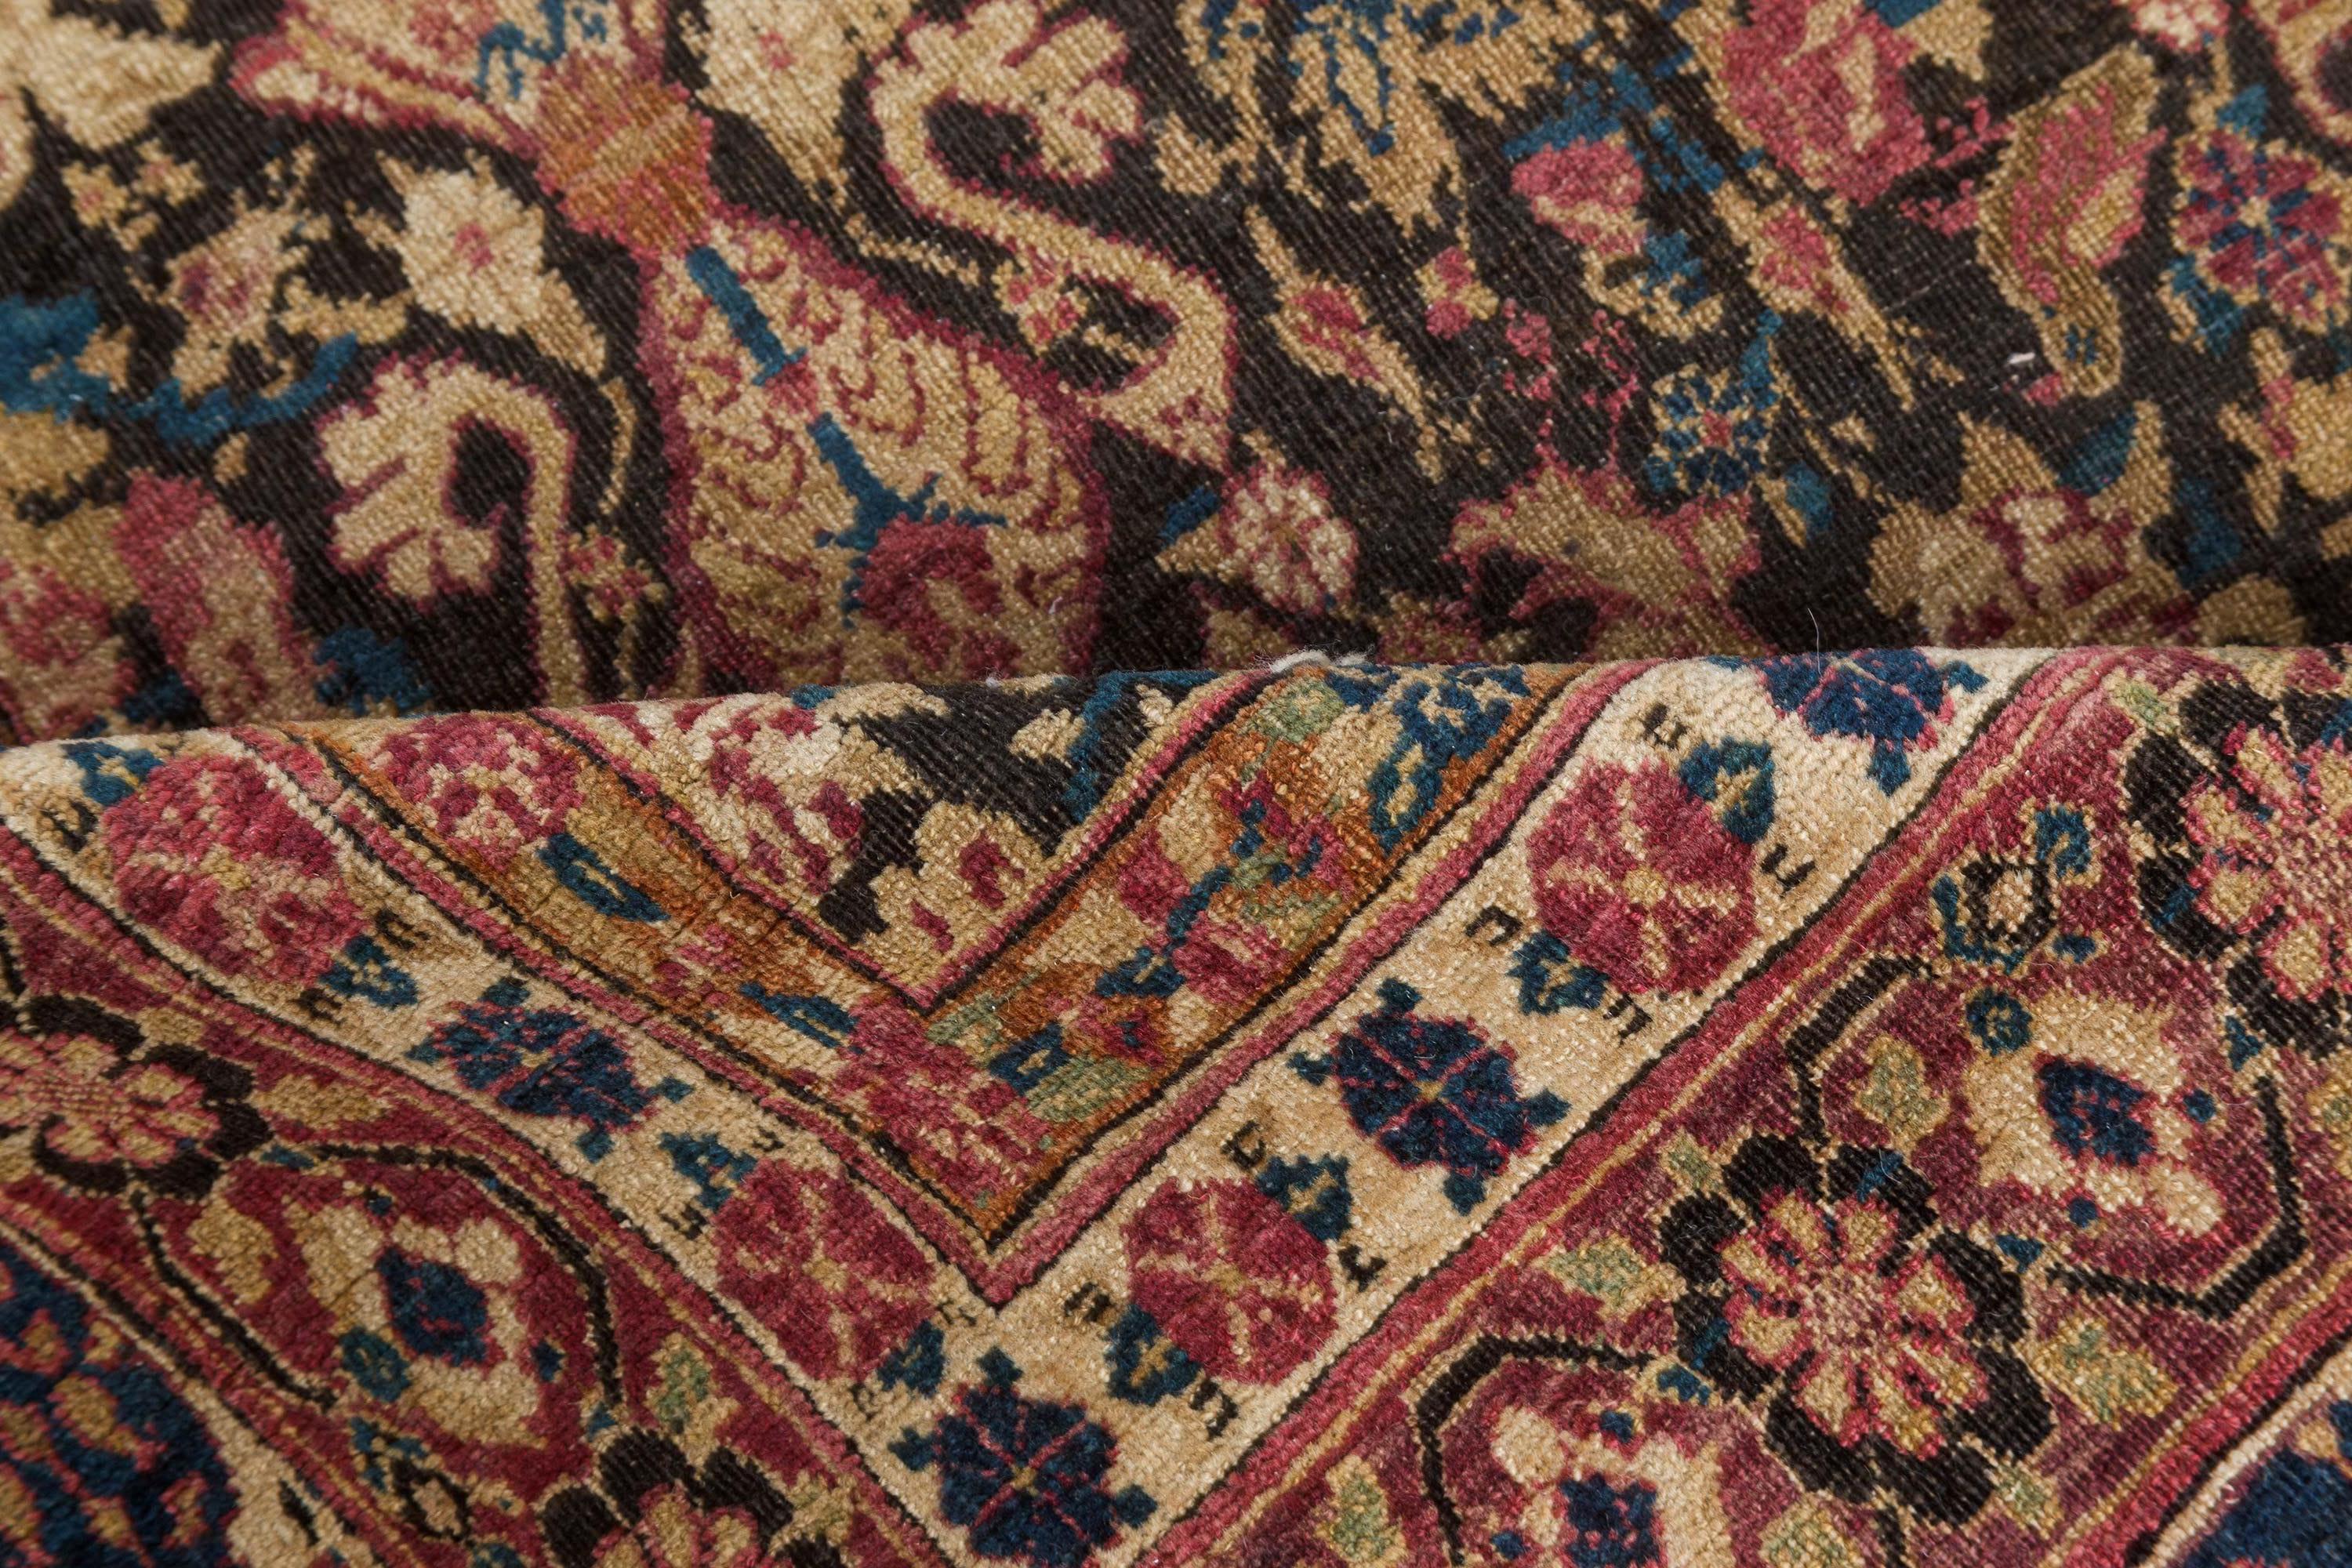 Authentic Persian Kirman Botanic Pink, Blue, Beige Handmade Wool Rug
Size: 6'7